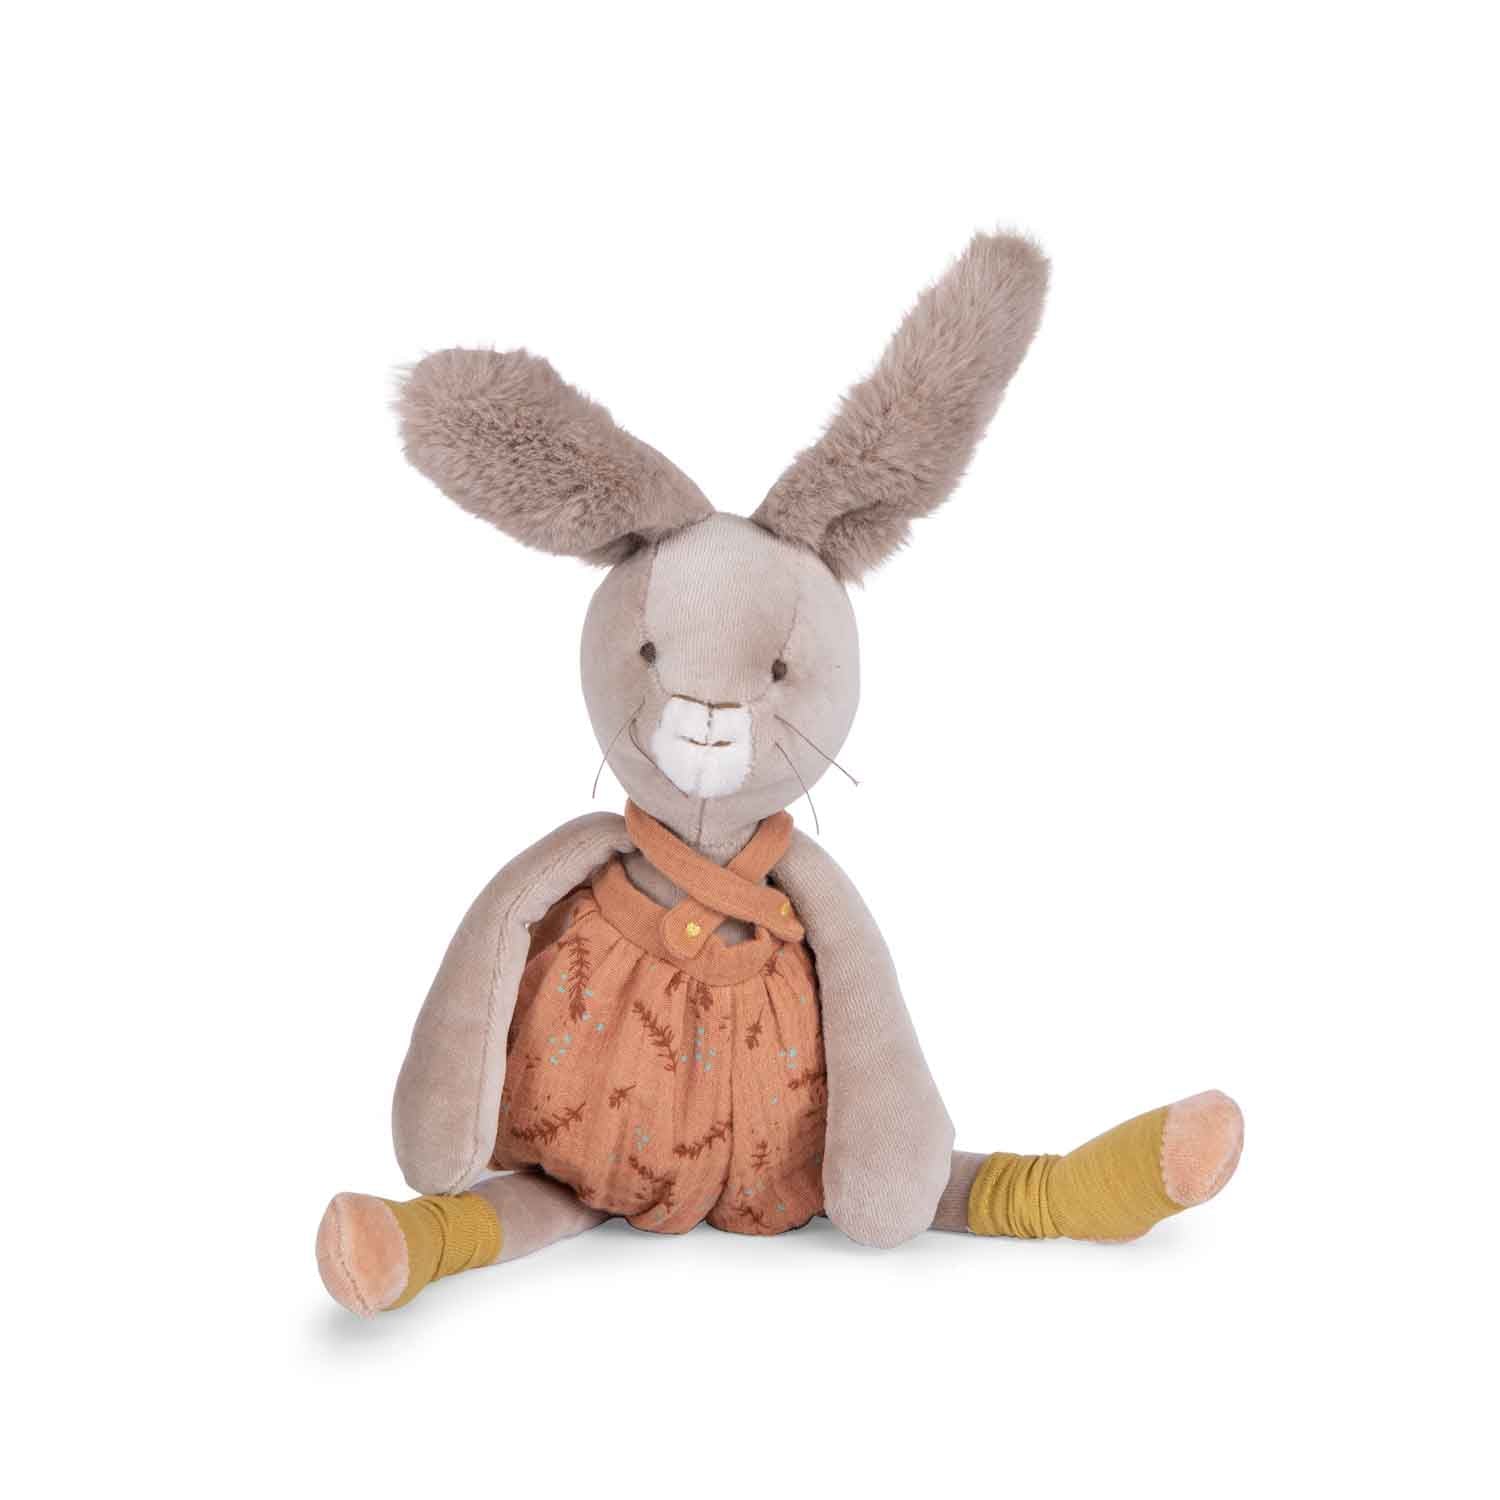 Trois Petits Lapins - Three Little Rabbits! Clay Bunny.